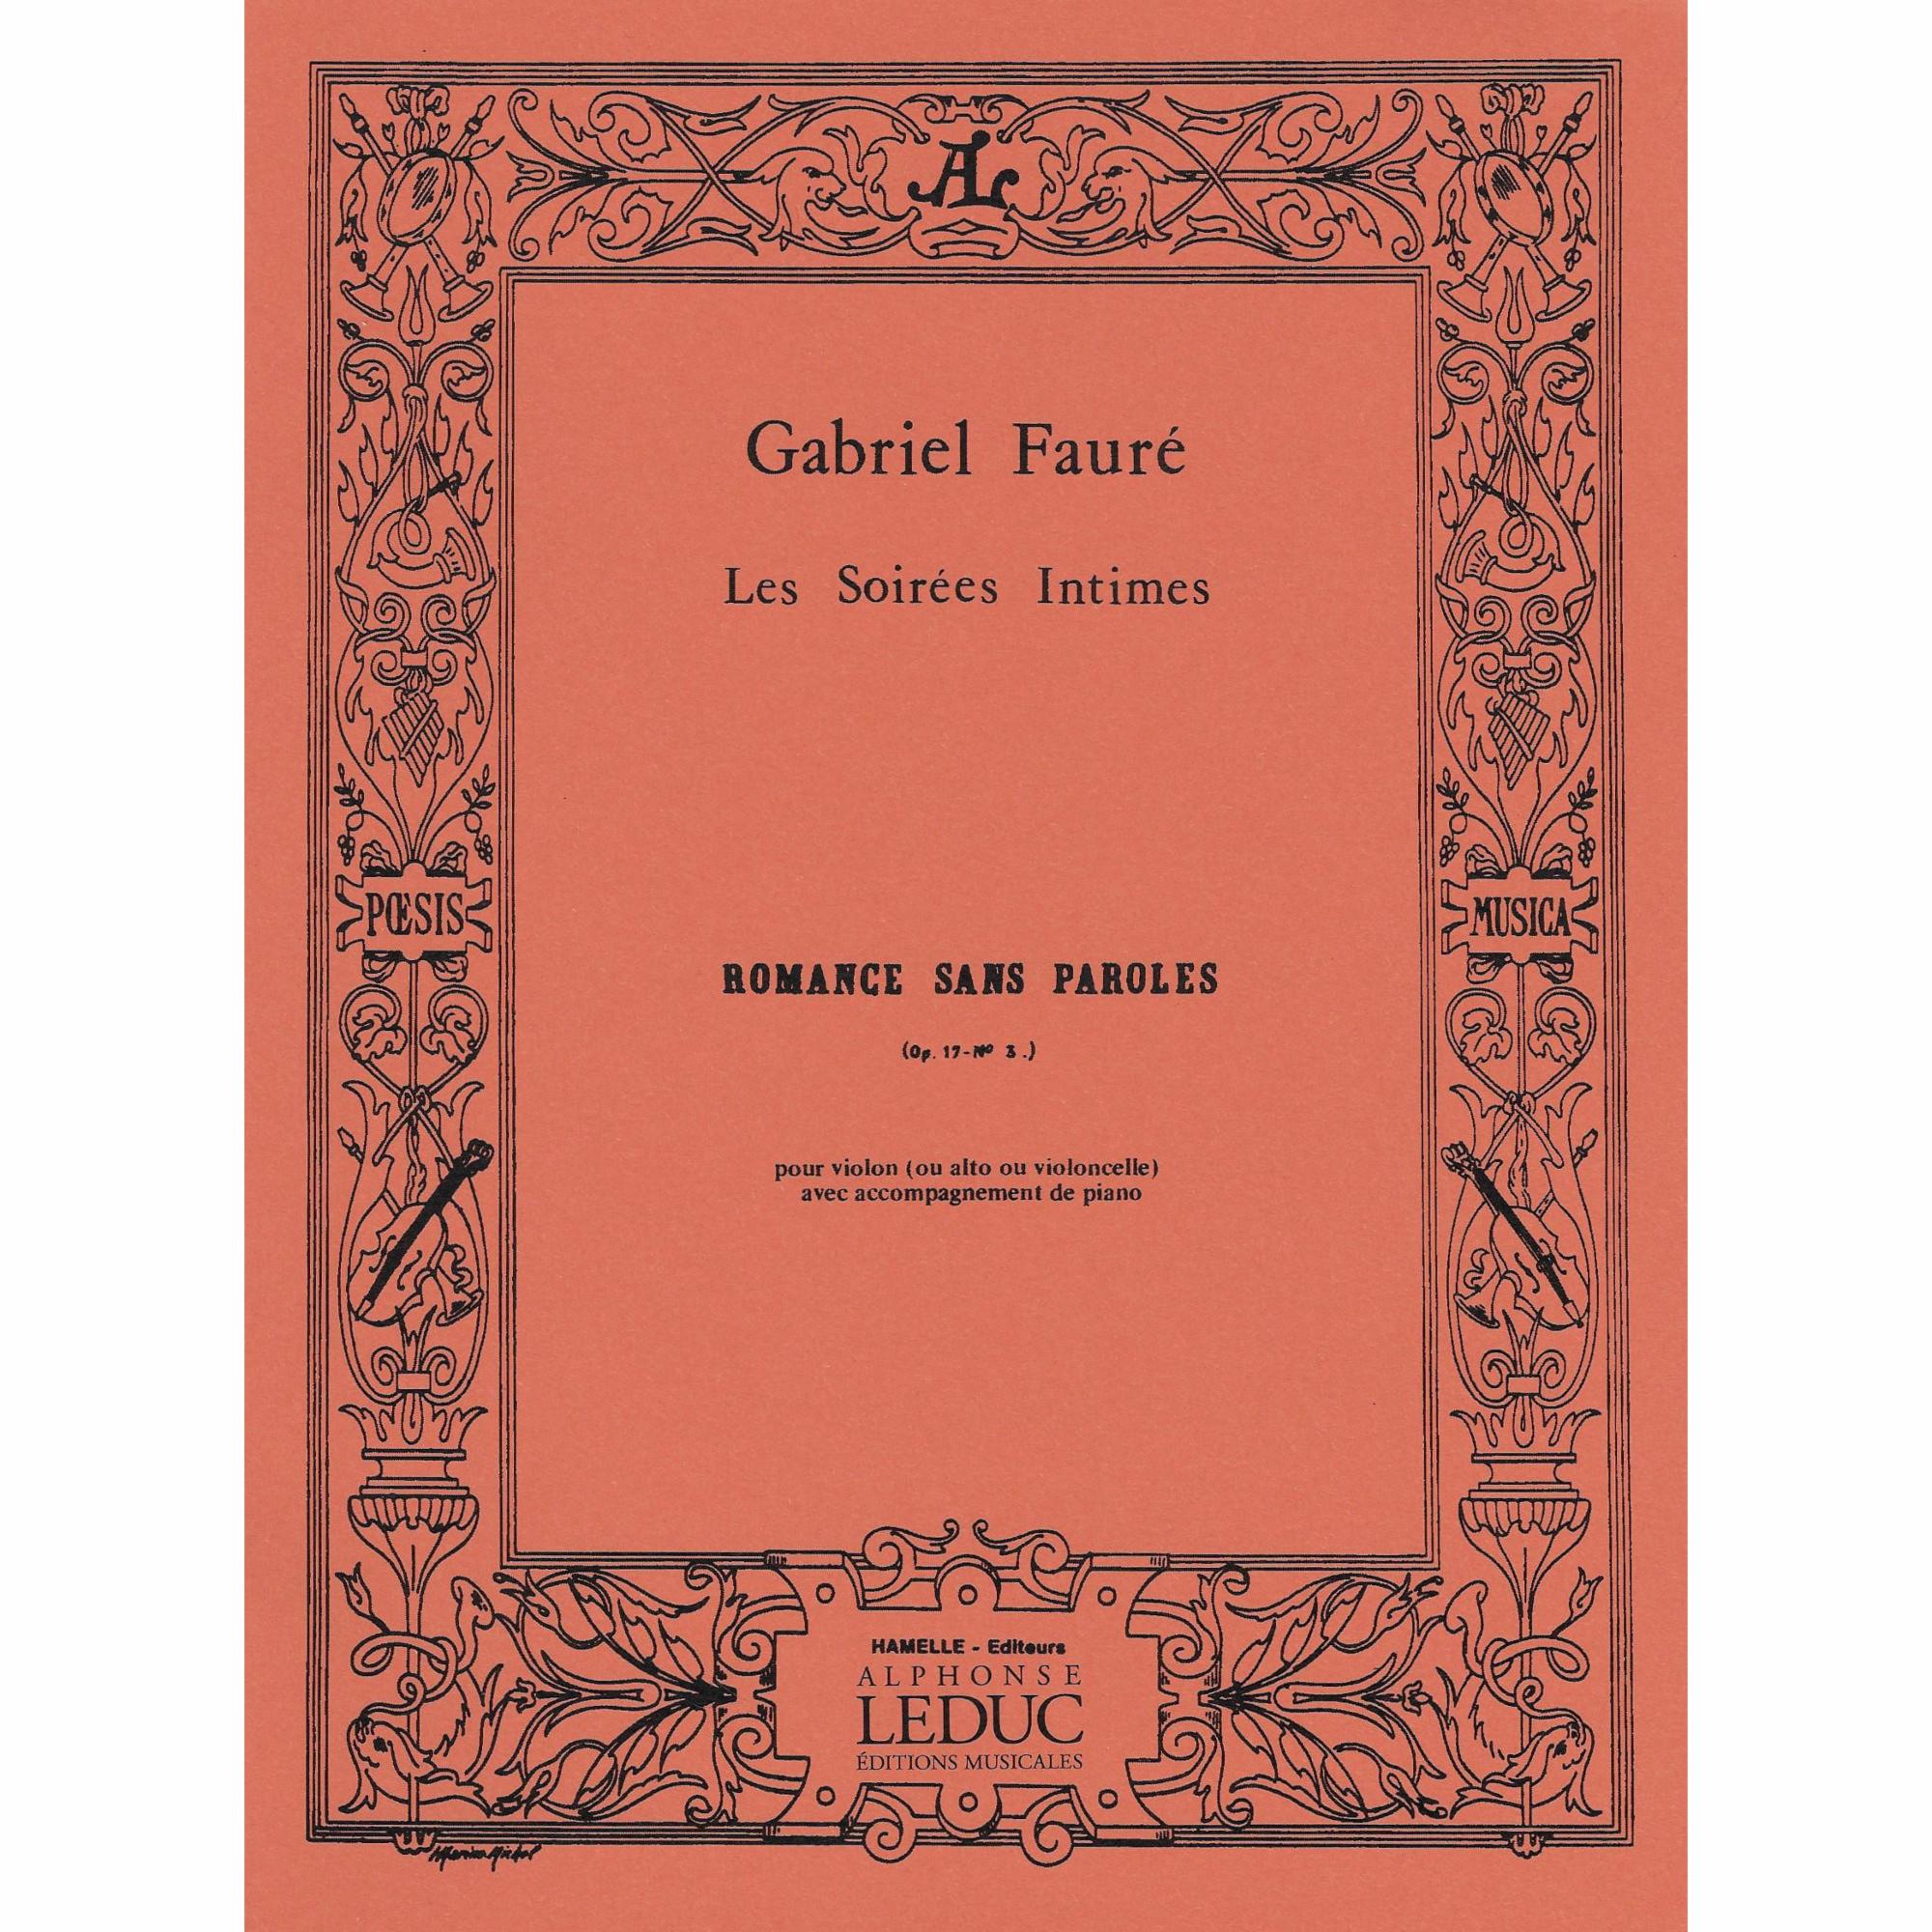 Faure -- Romance sans paroles, Op. 17, No. 3 for Violin, Viola, or Cello and Piano